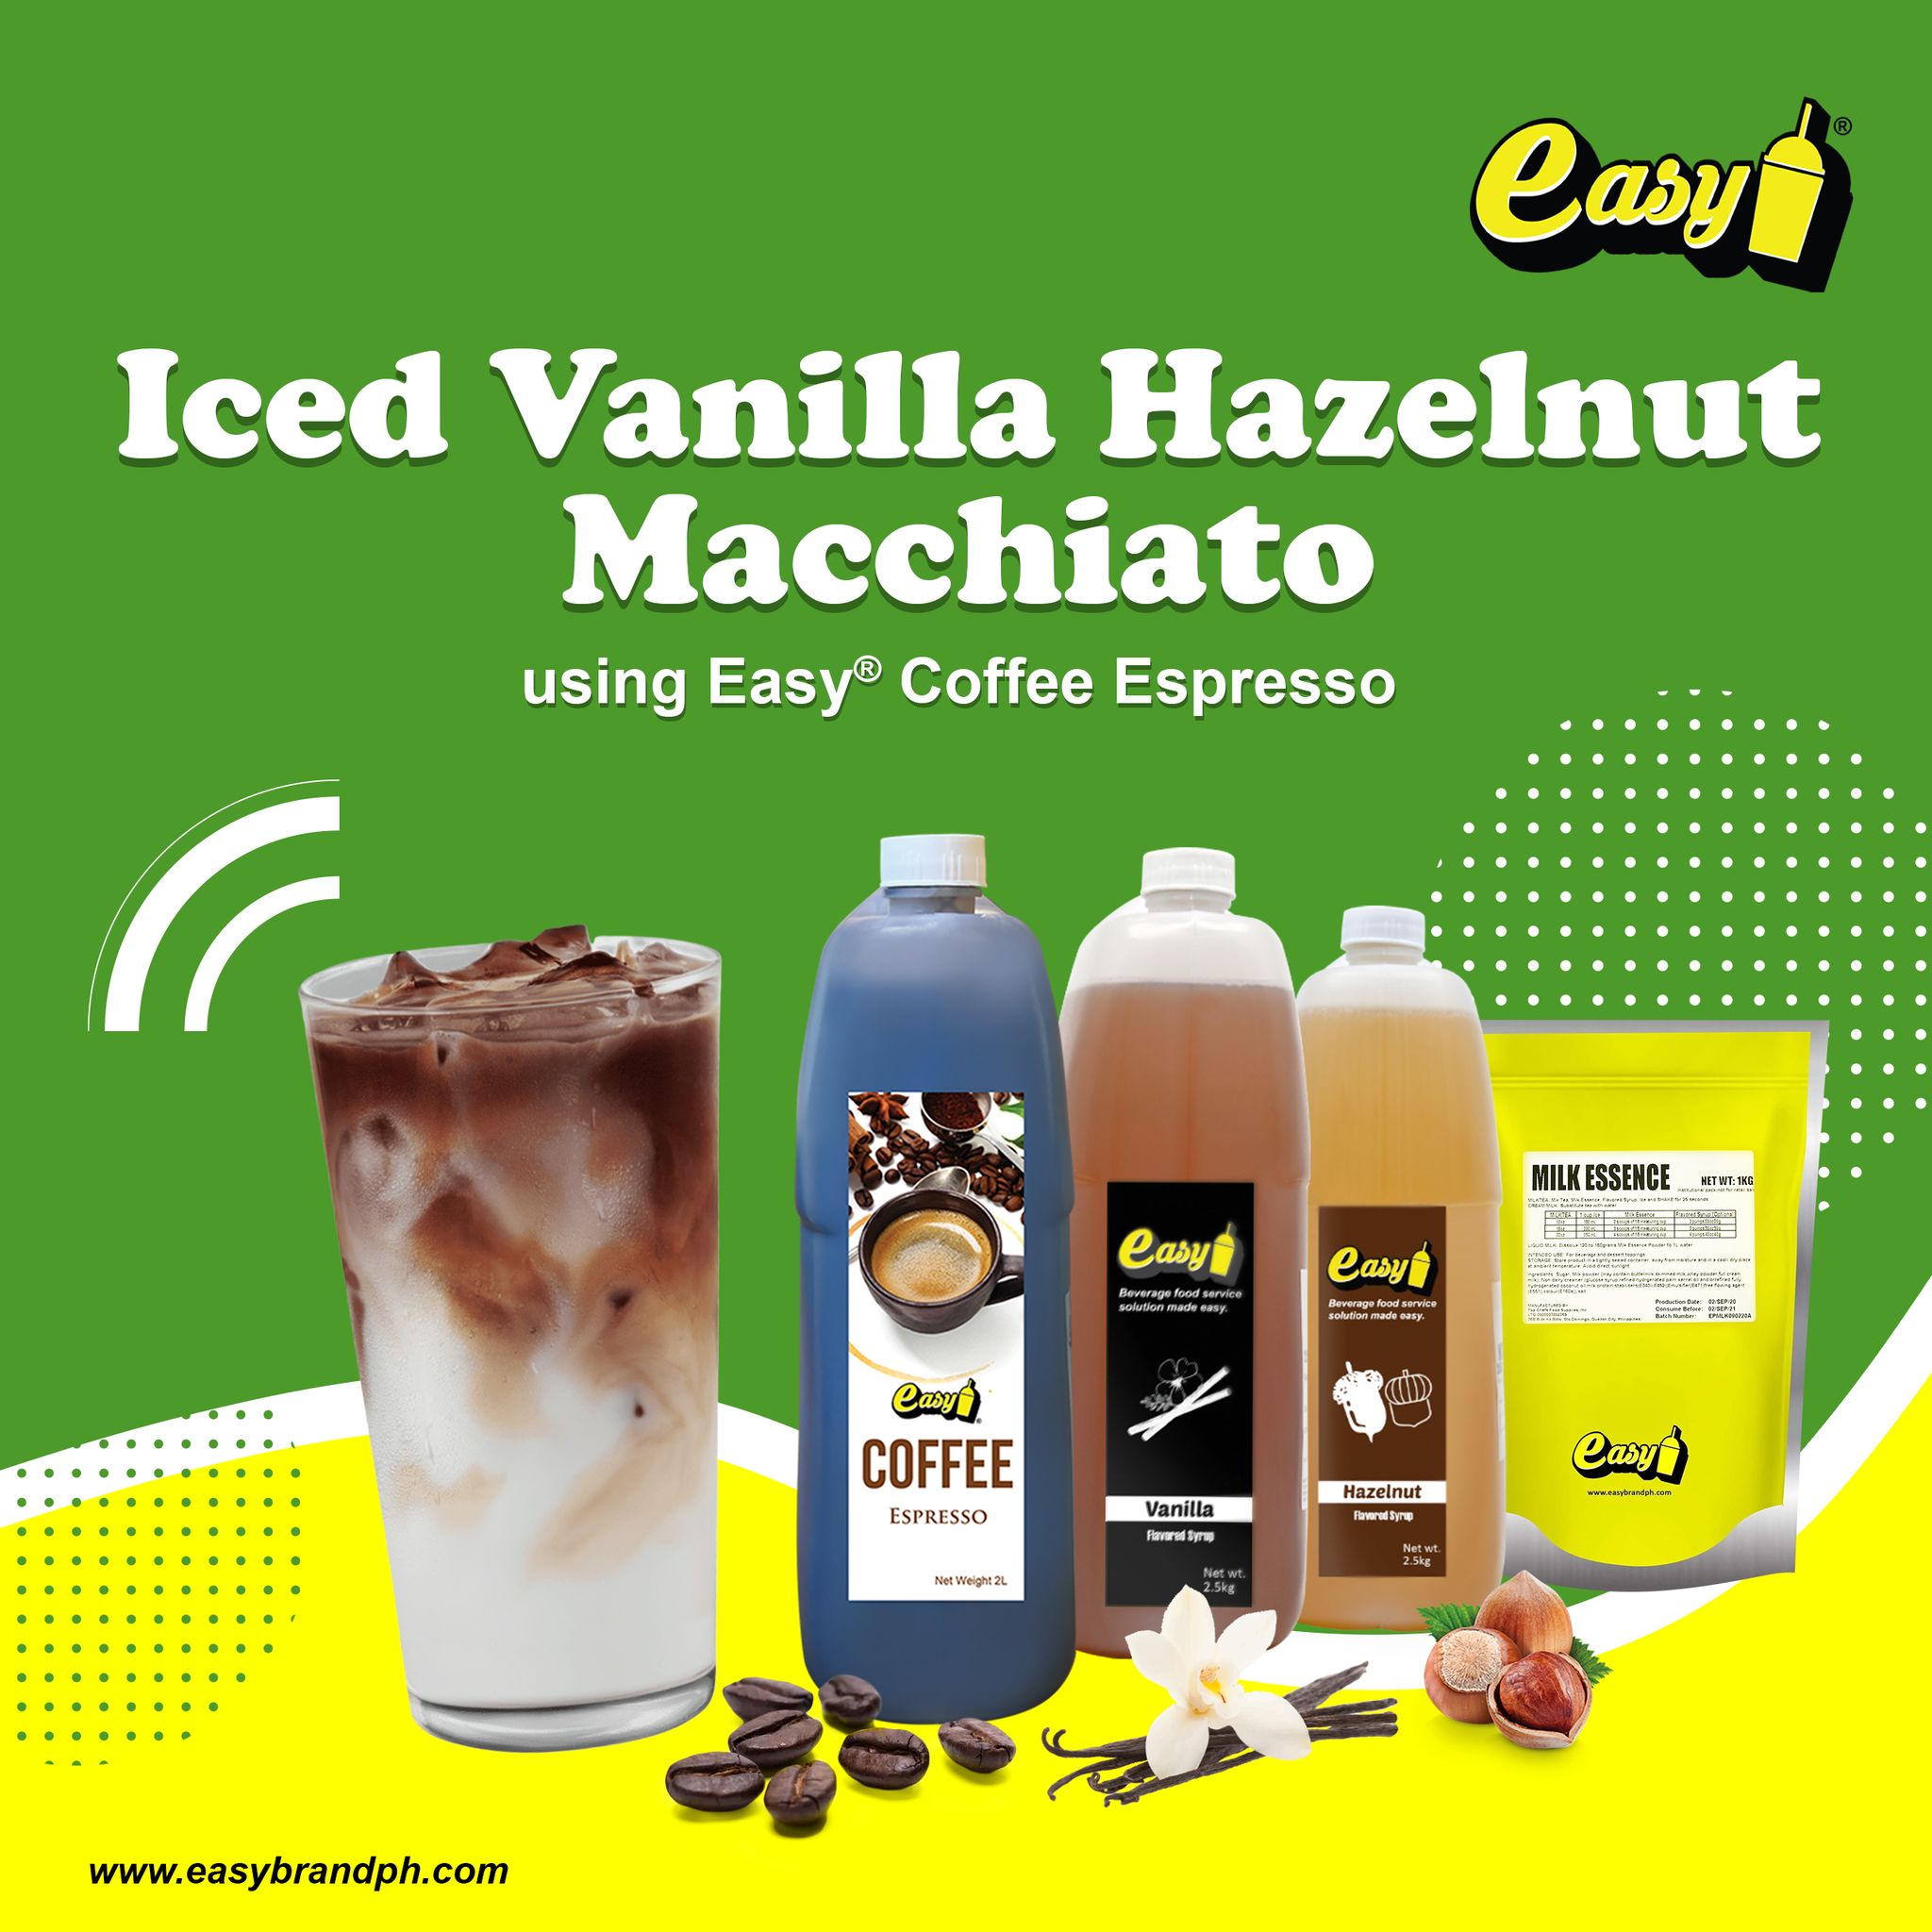 Iced Vanilla Hazelnut Macchiato